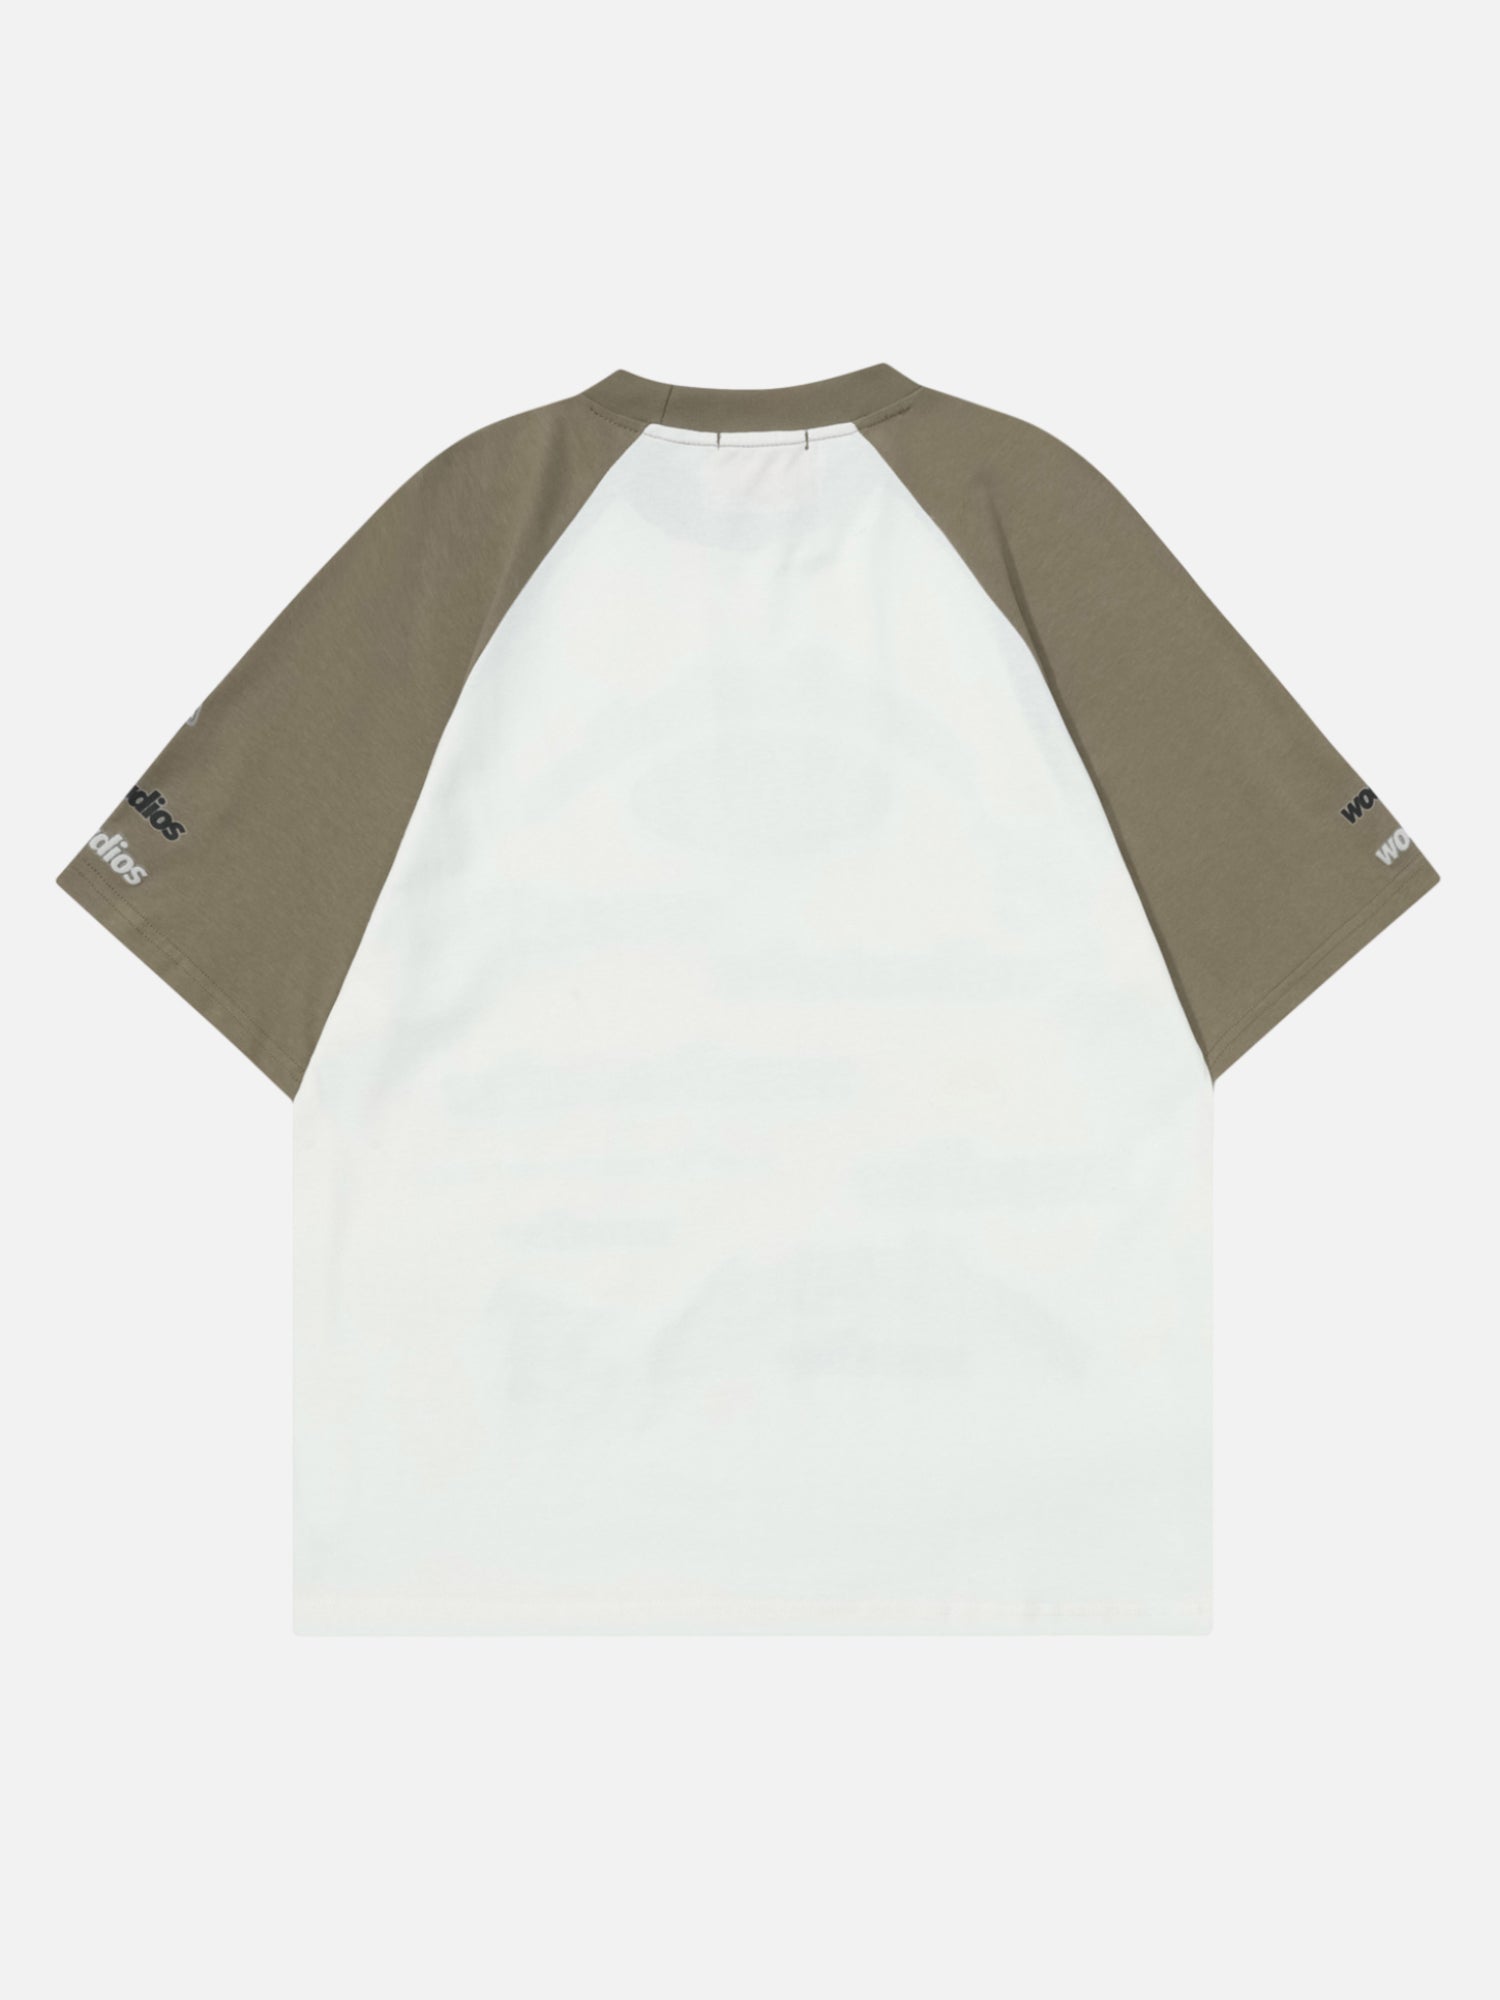 Thesupermade American High Street Retro Contrasting Color Design T-shirt